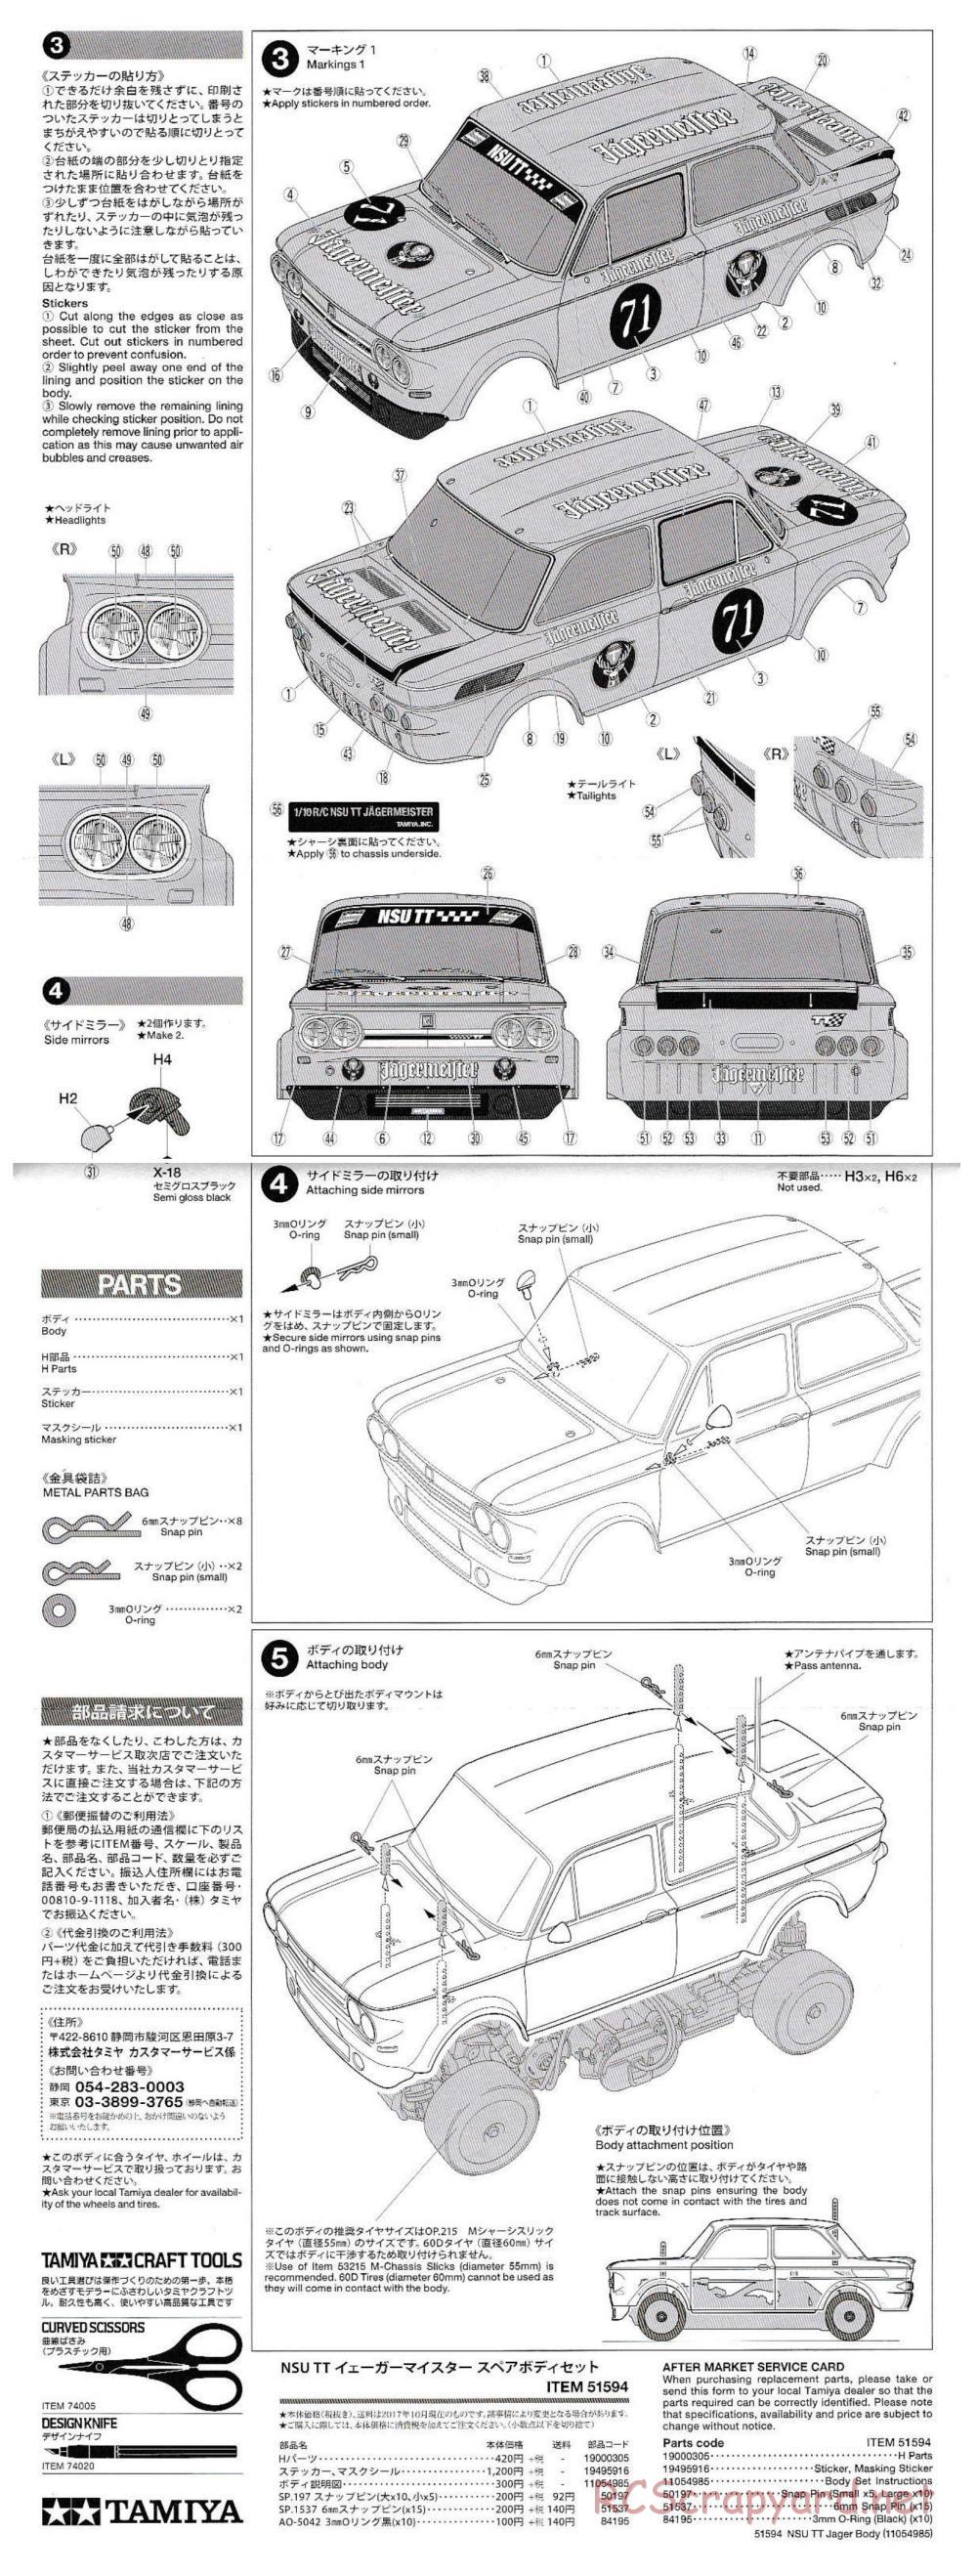 Tamiya - NSU TT Jagermeister - M-05 Chassis - Body Manual - Page 2